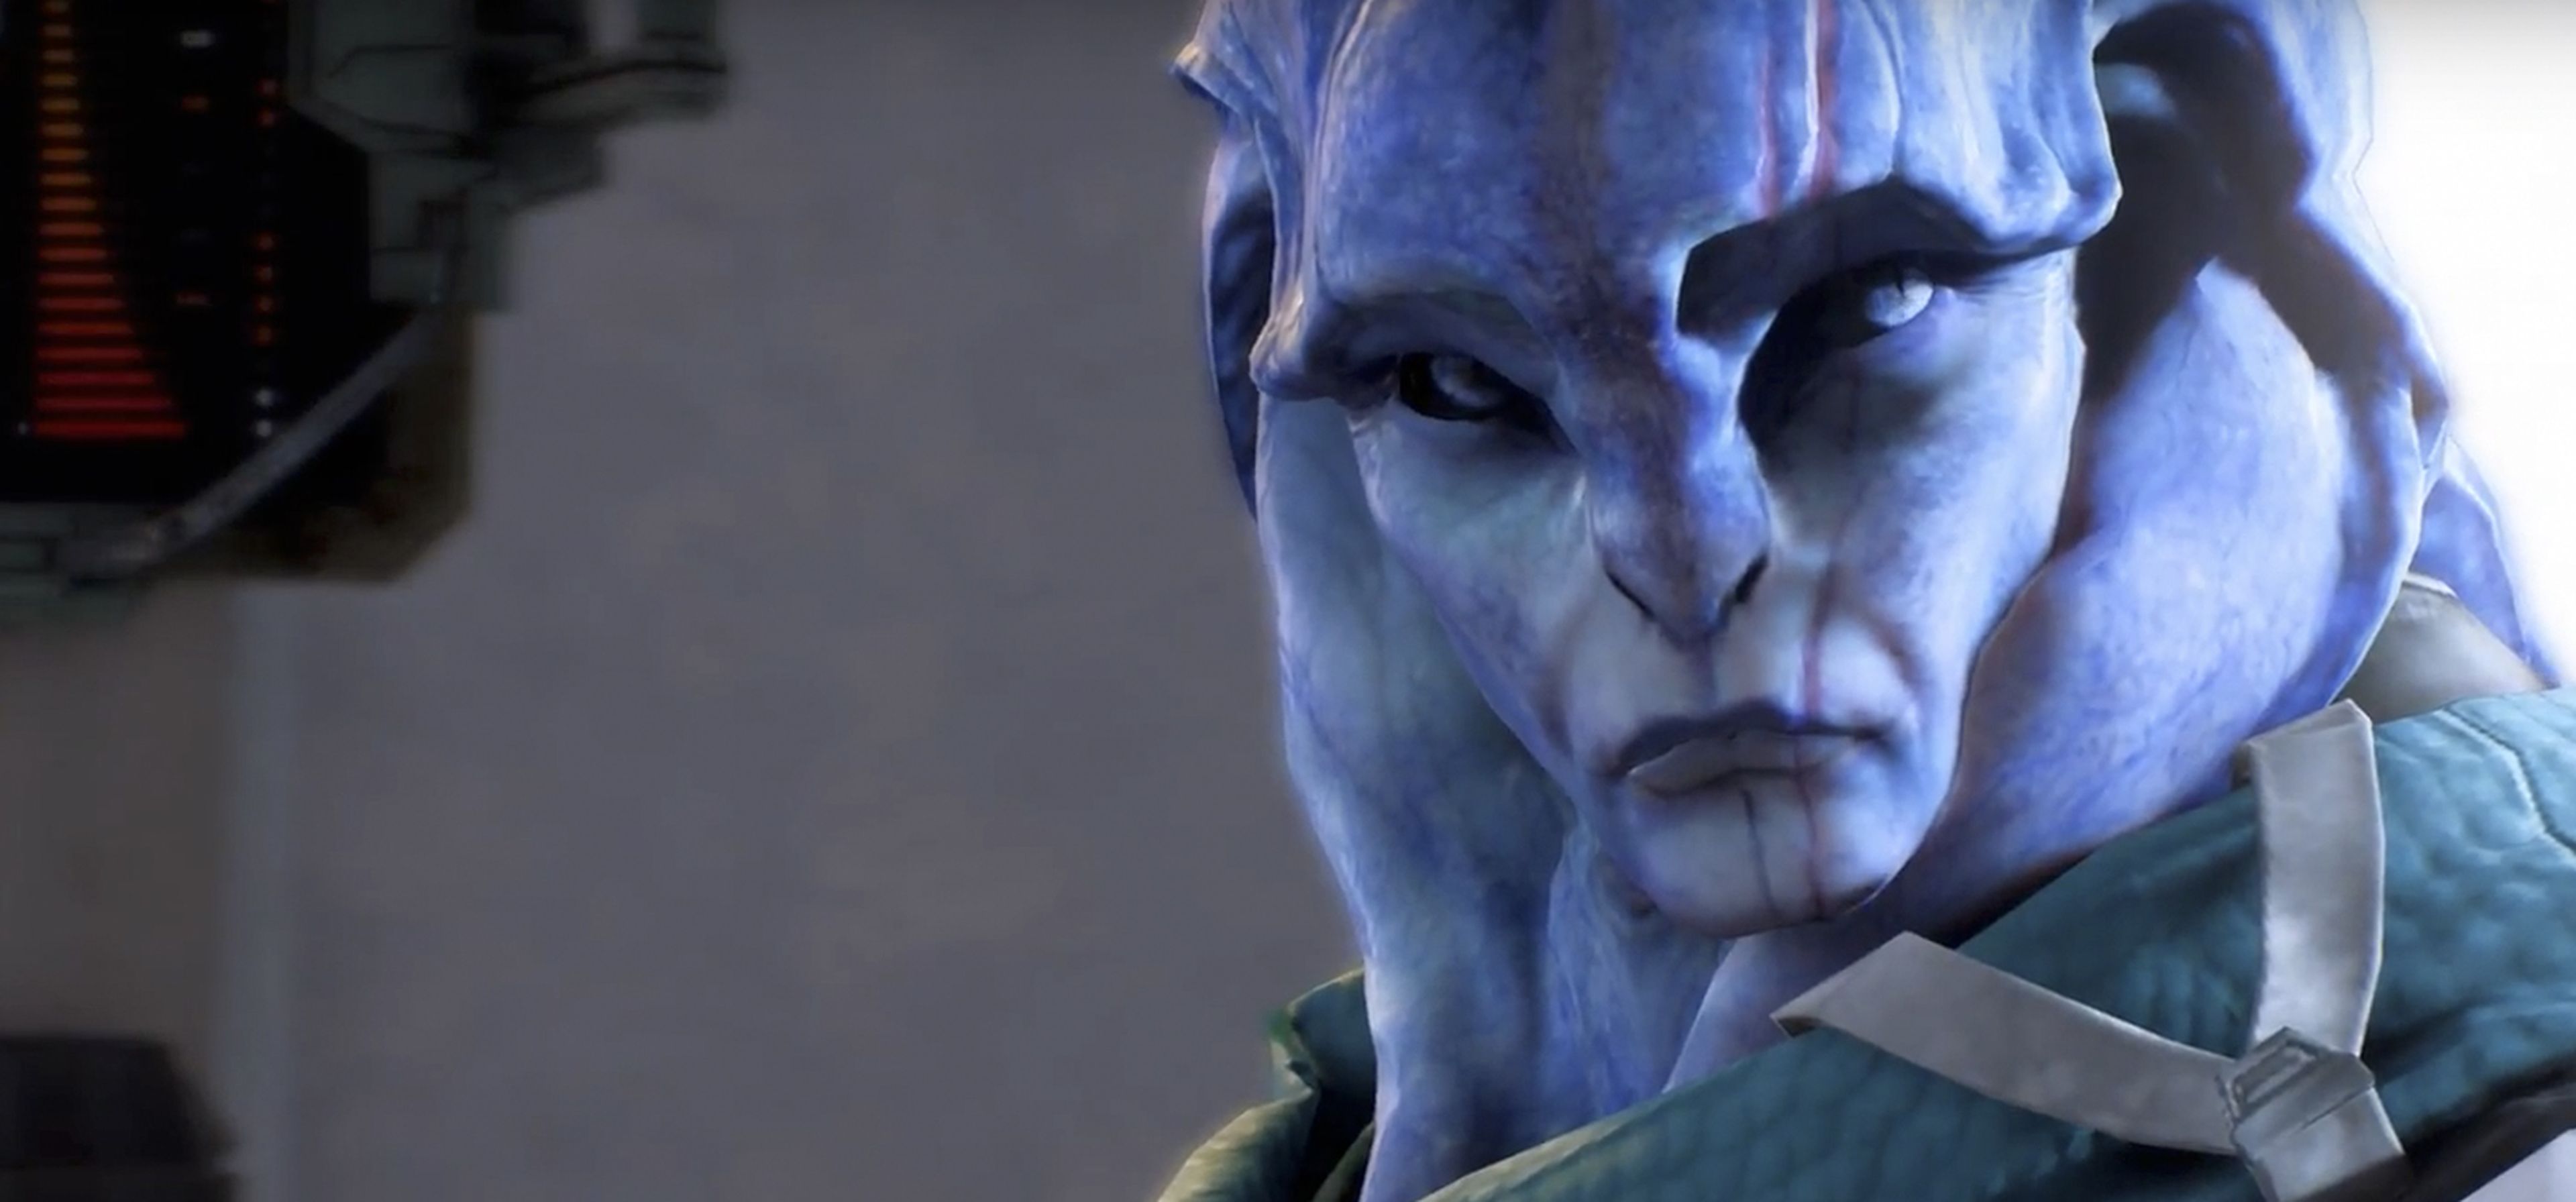 Mass Effect Andromeda - Gameplay del juego final